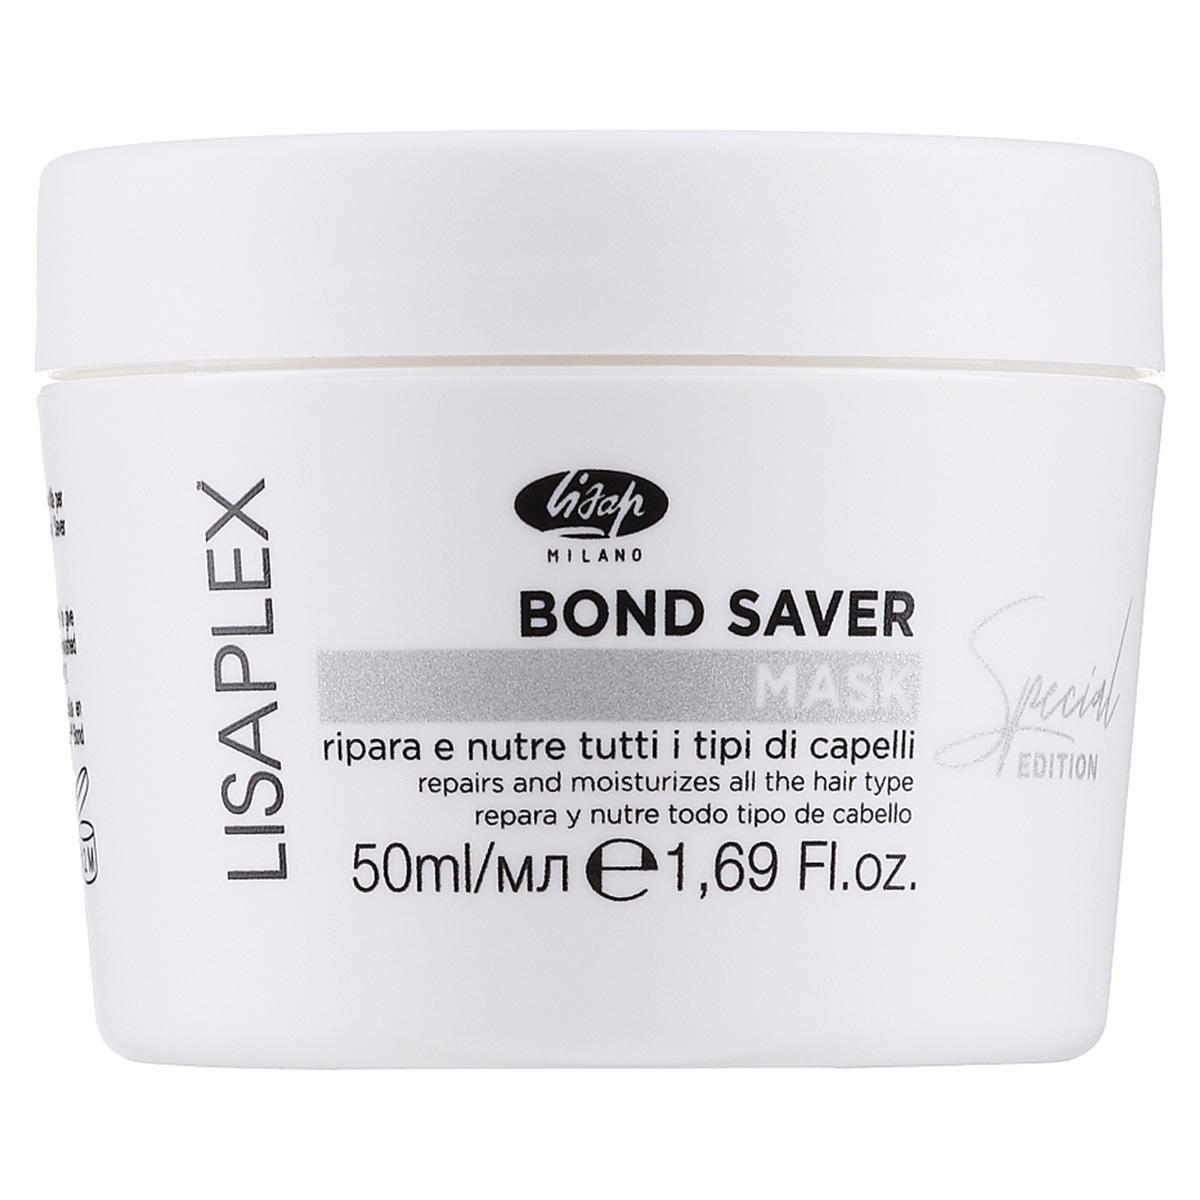 Lisap Lisaplex BOND SAVER MASK Special Edition 50 ml - 1